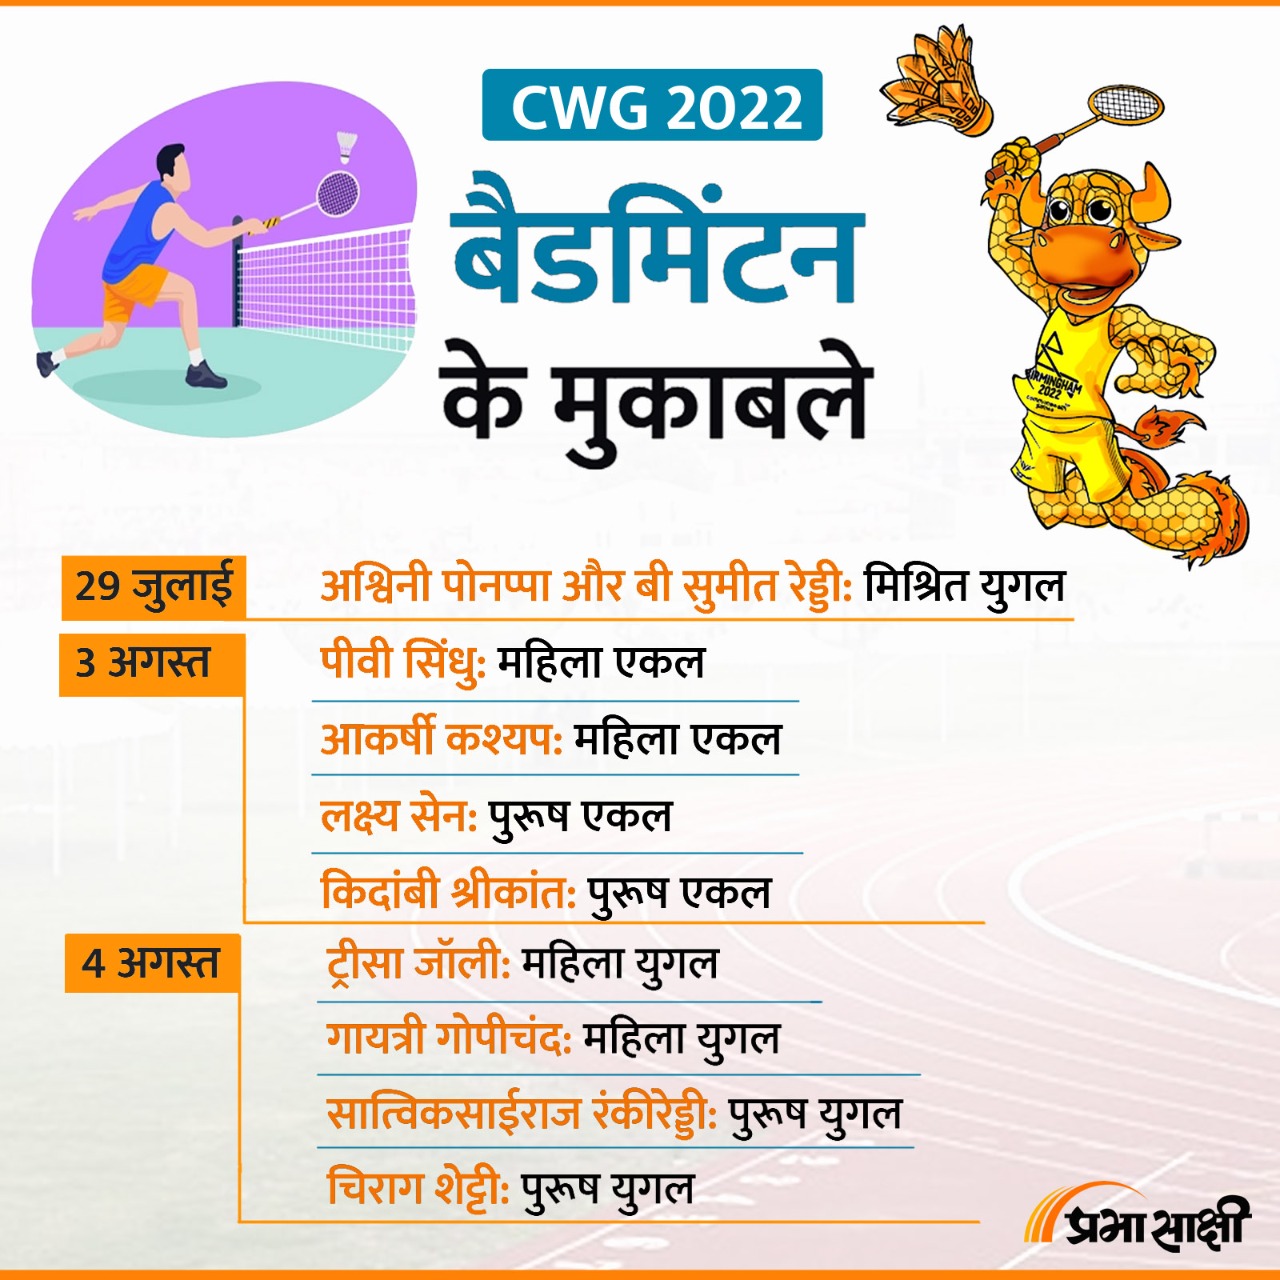 CWG 2022 Badminton Matches